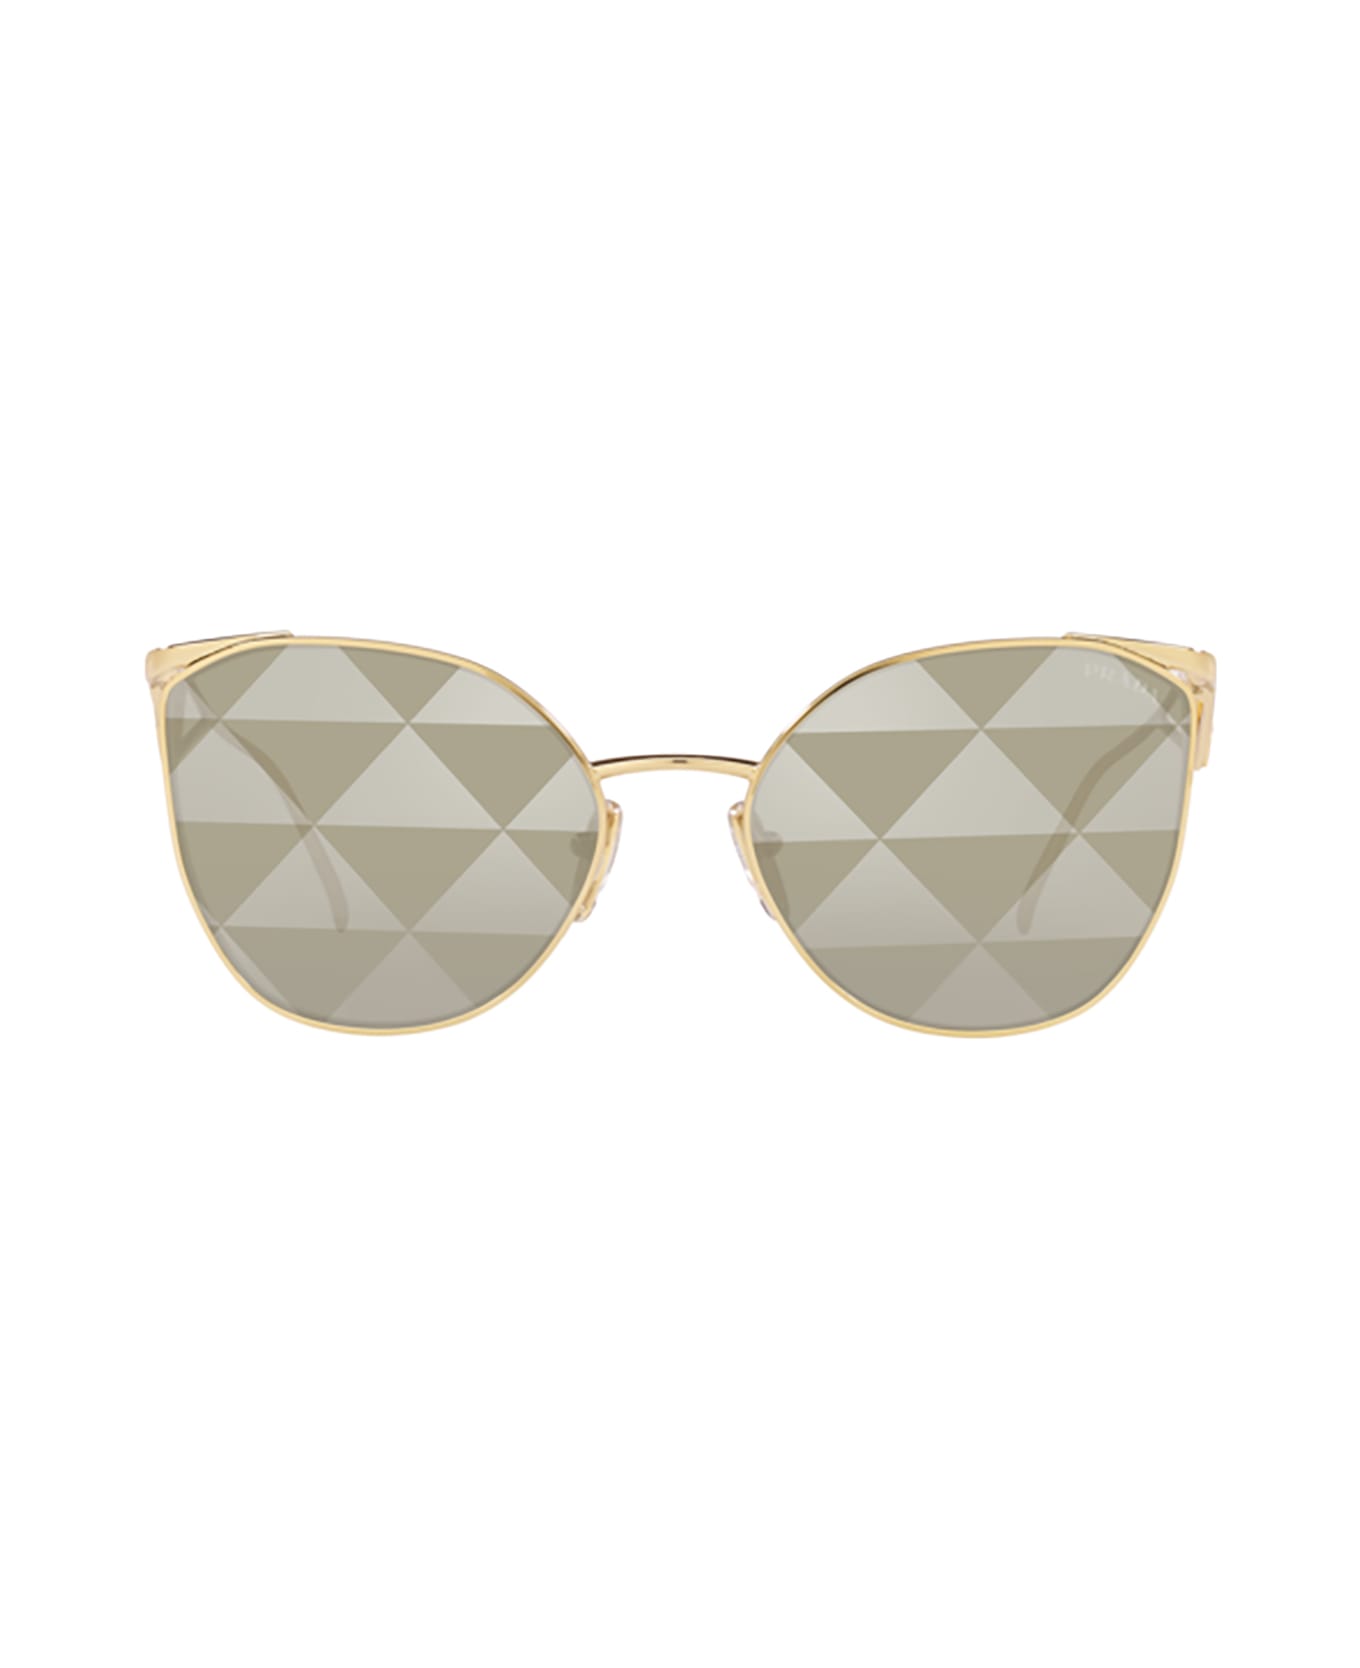 Prada Eyewear Pr 50zs Pale Gold Sunglasses - Pale Gold